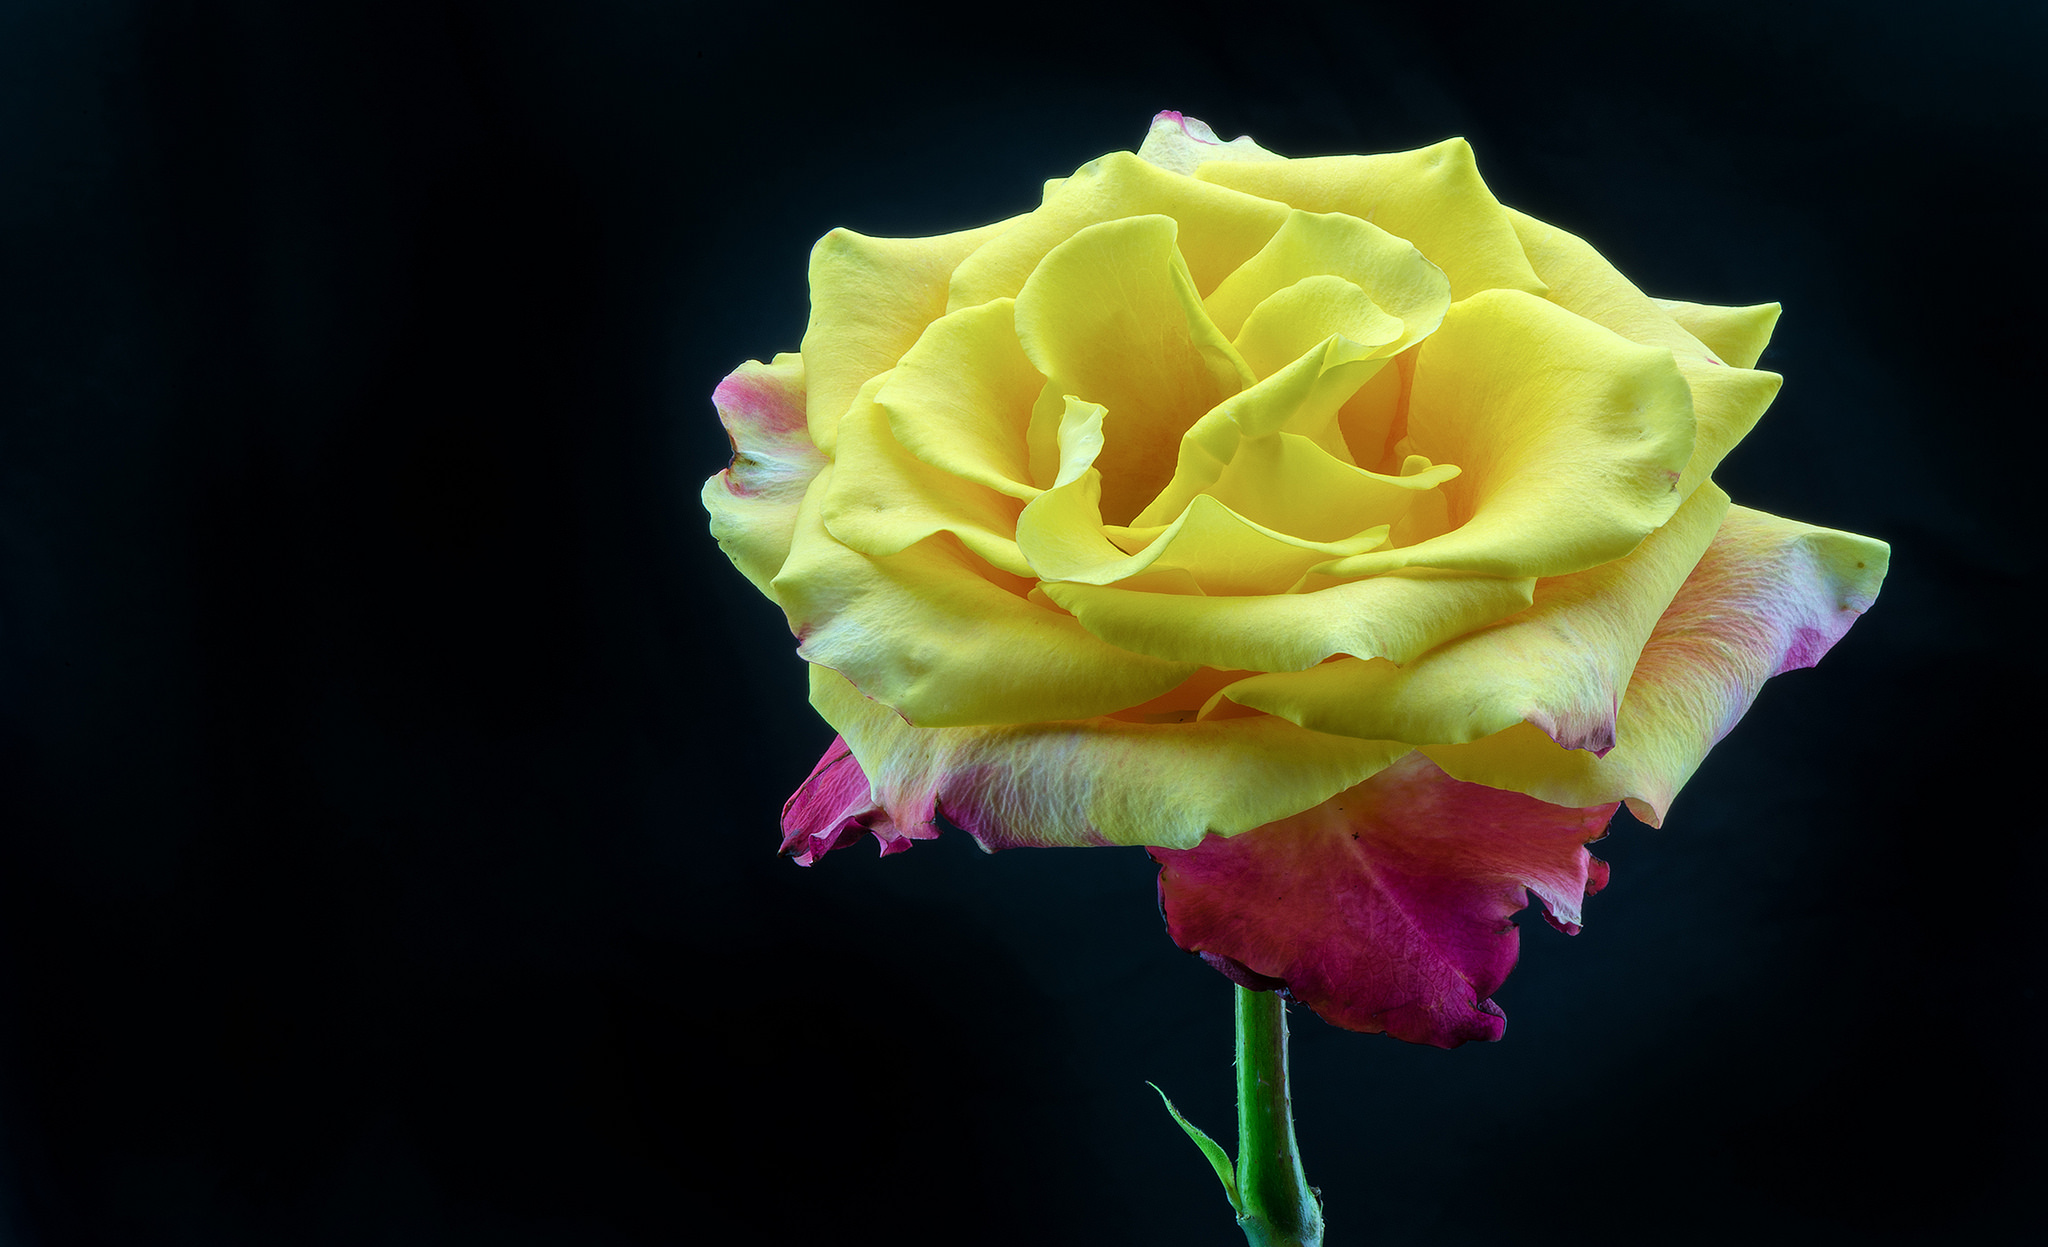 Earth Flower Rose Yellow Rose Yellow Flower 2048x1247